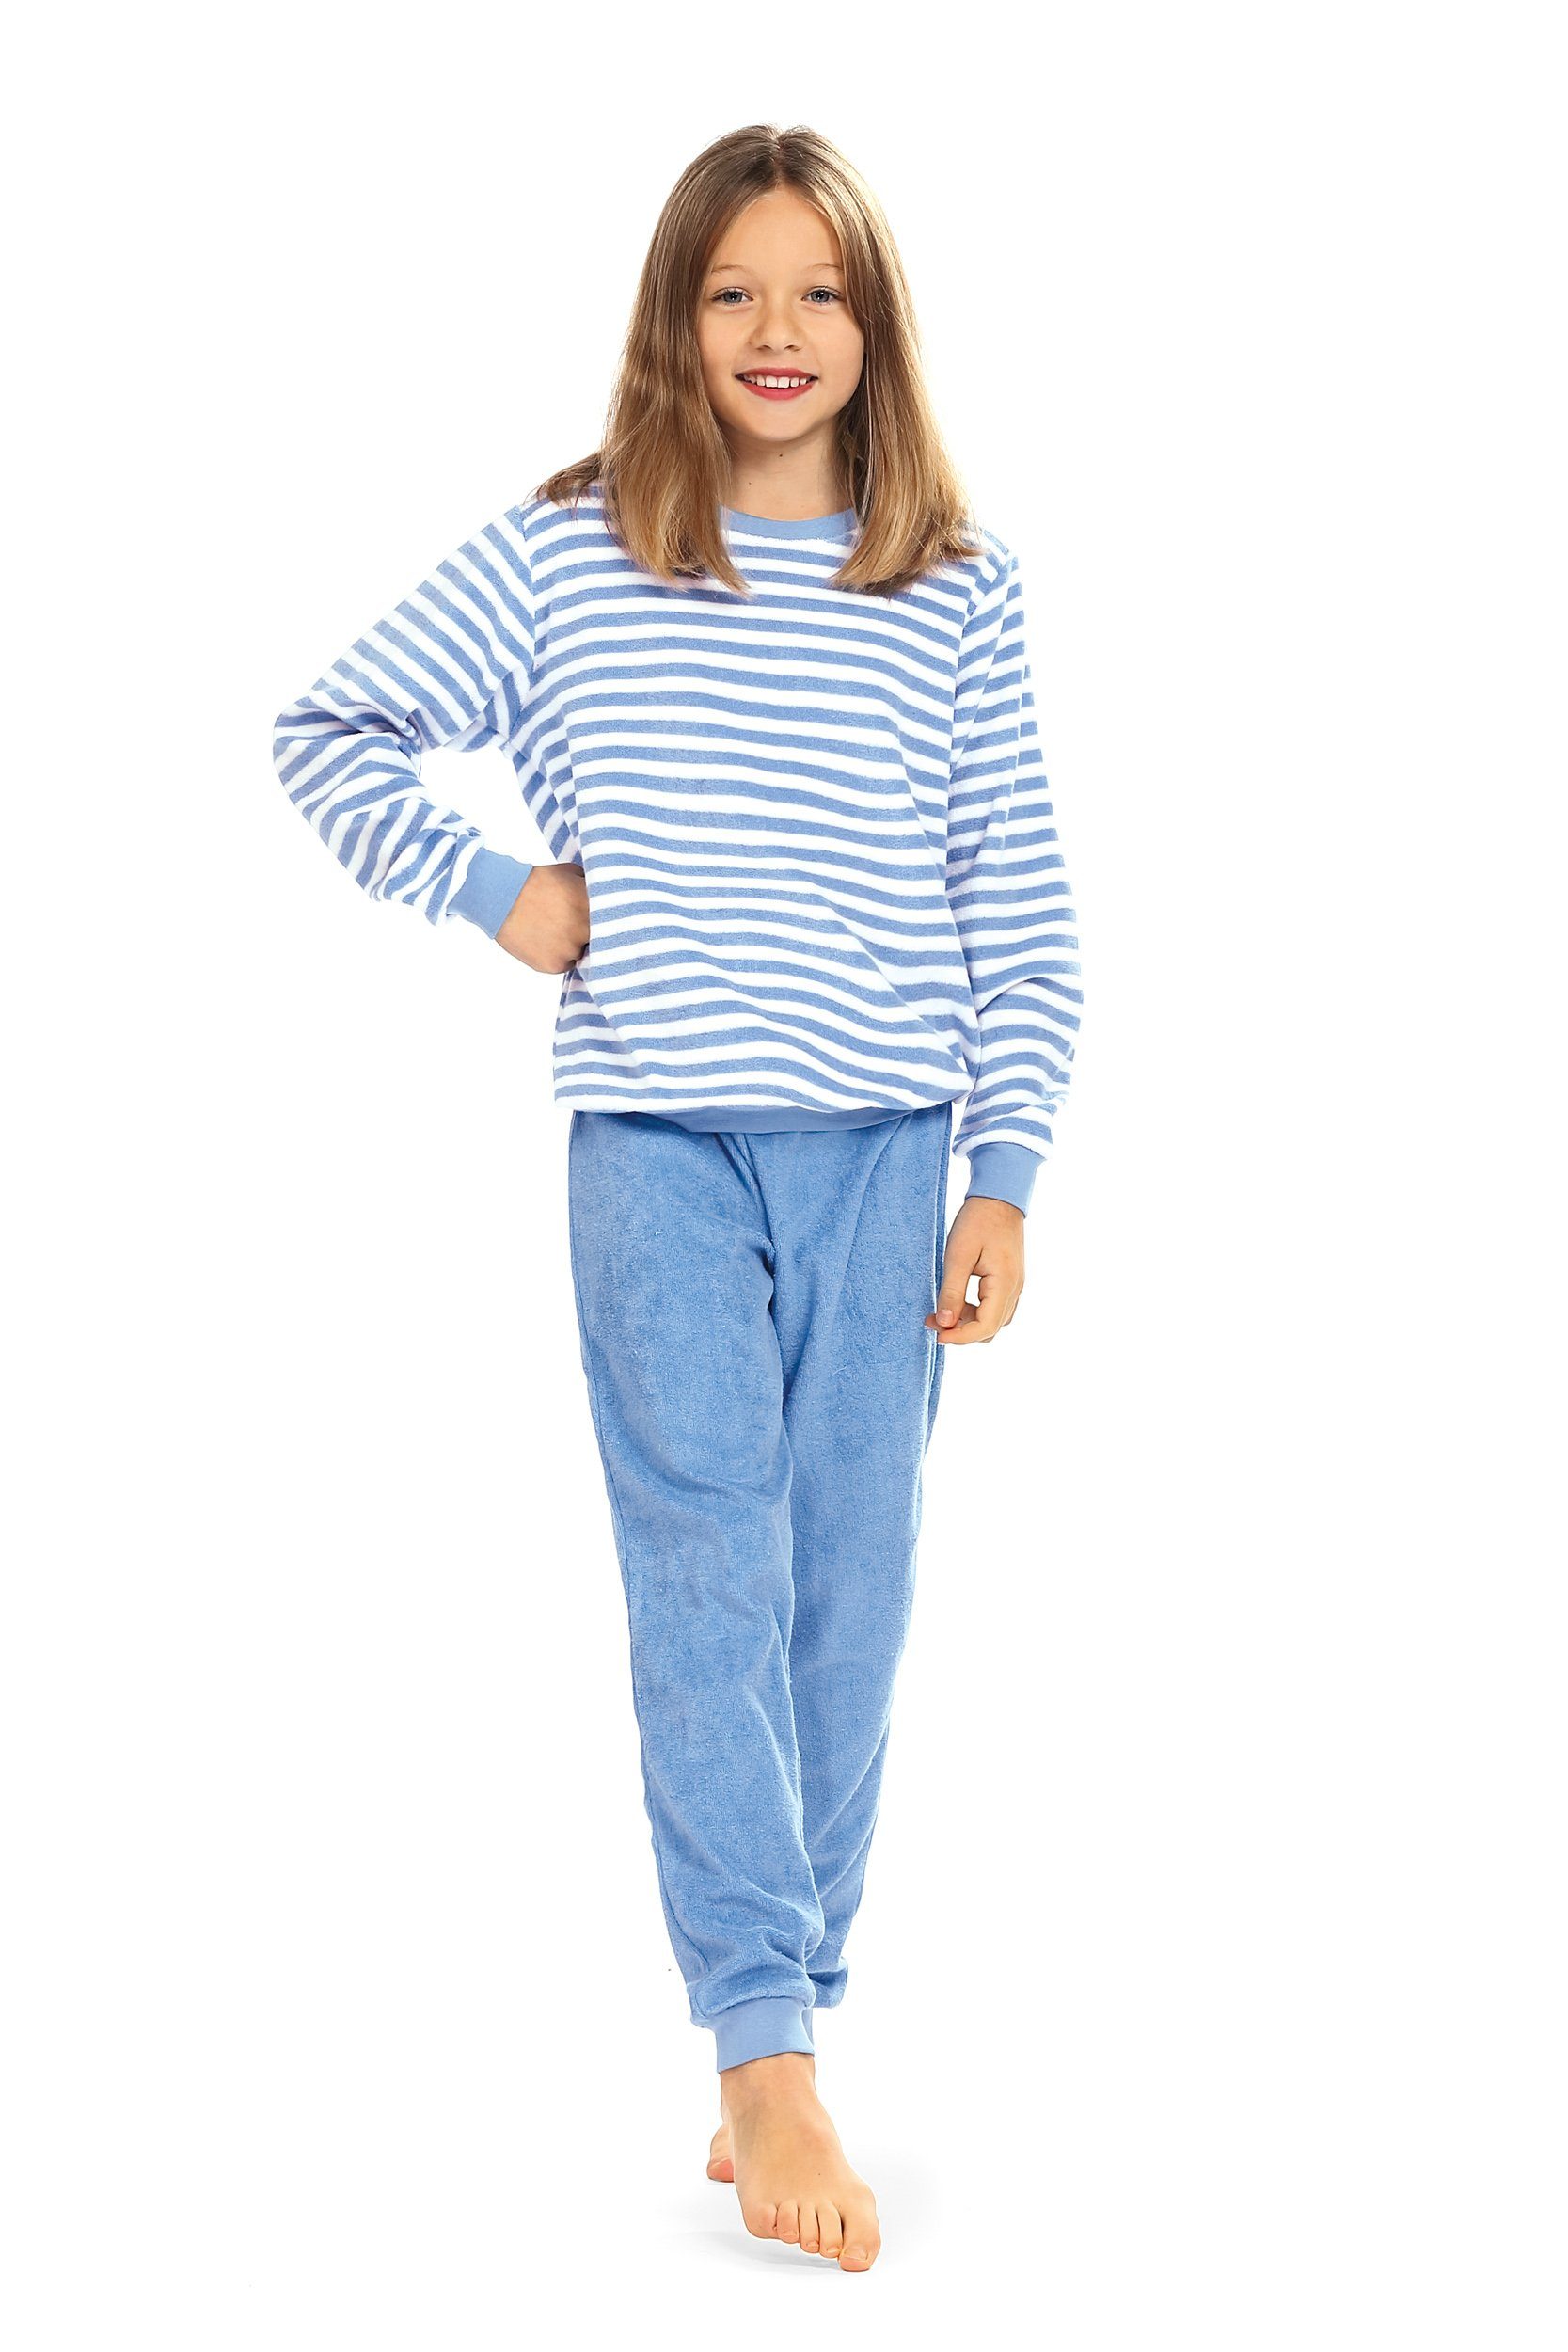 comtessa Schlafanzug Comte Kids (Set, Pyjama Frottee 2-teilig) Langarm Mädchen blau Schlafanzug Baumwolle 2 tlg., Ringel